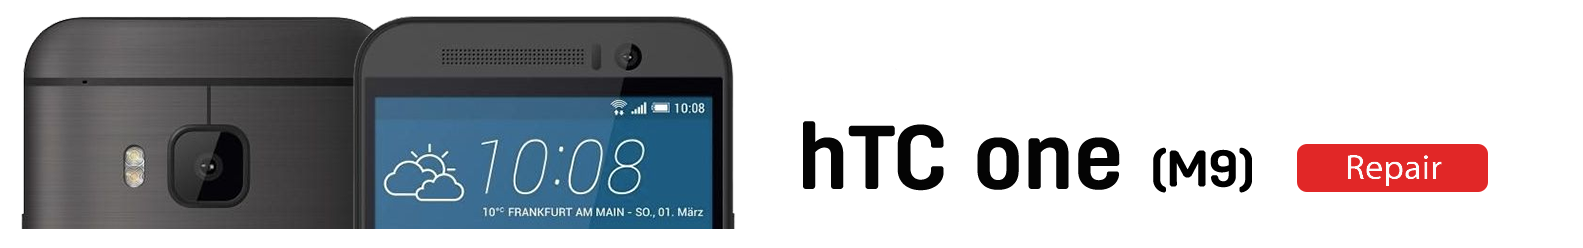 htcM9 HTC One M9 Repairs